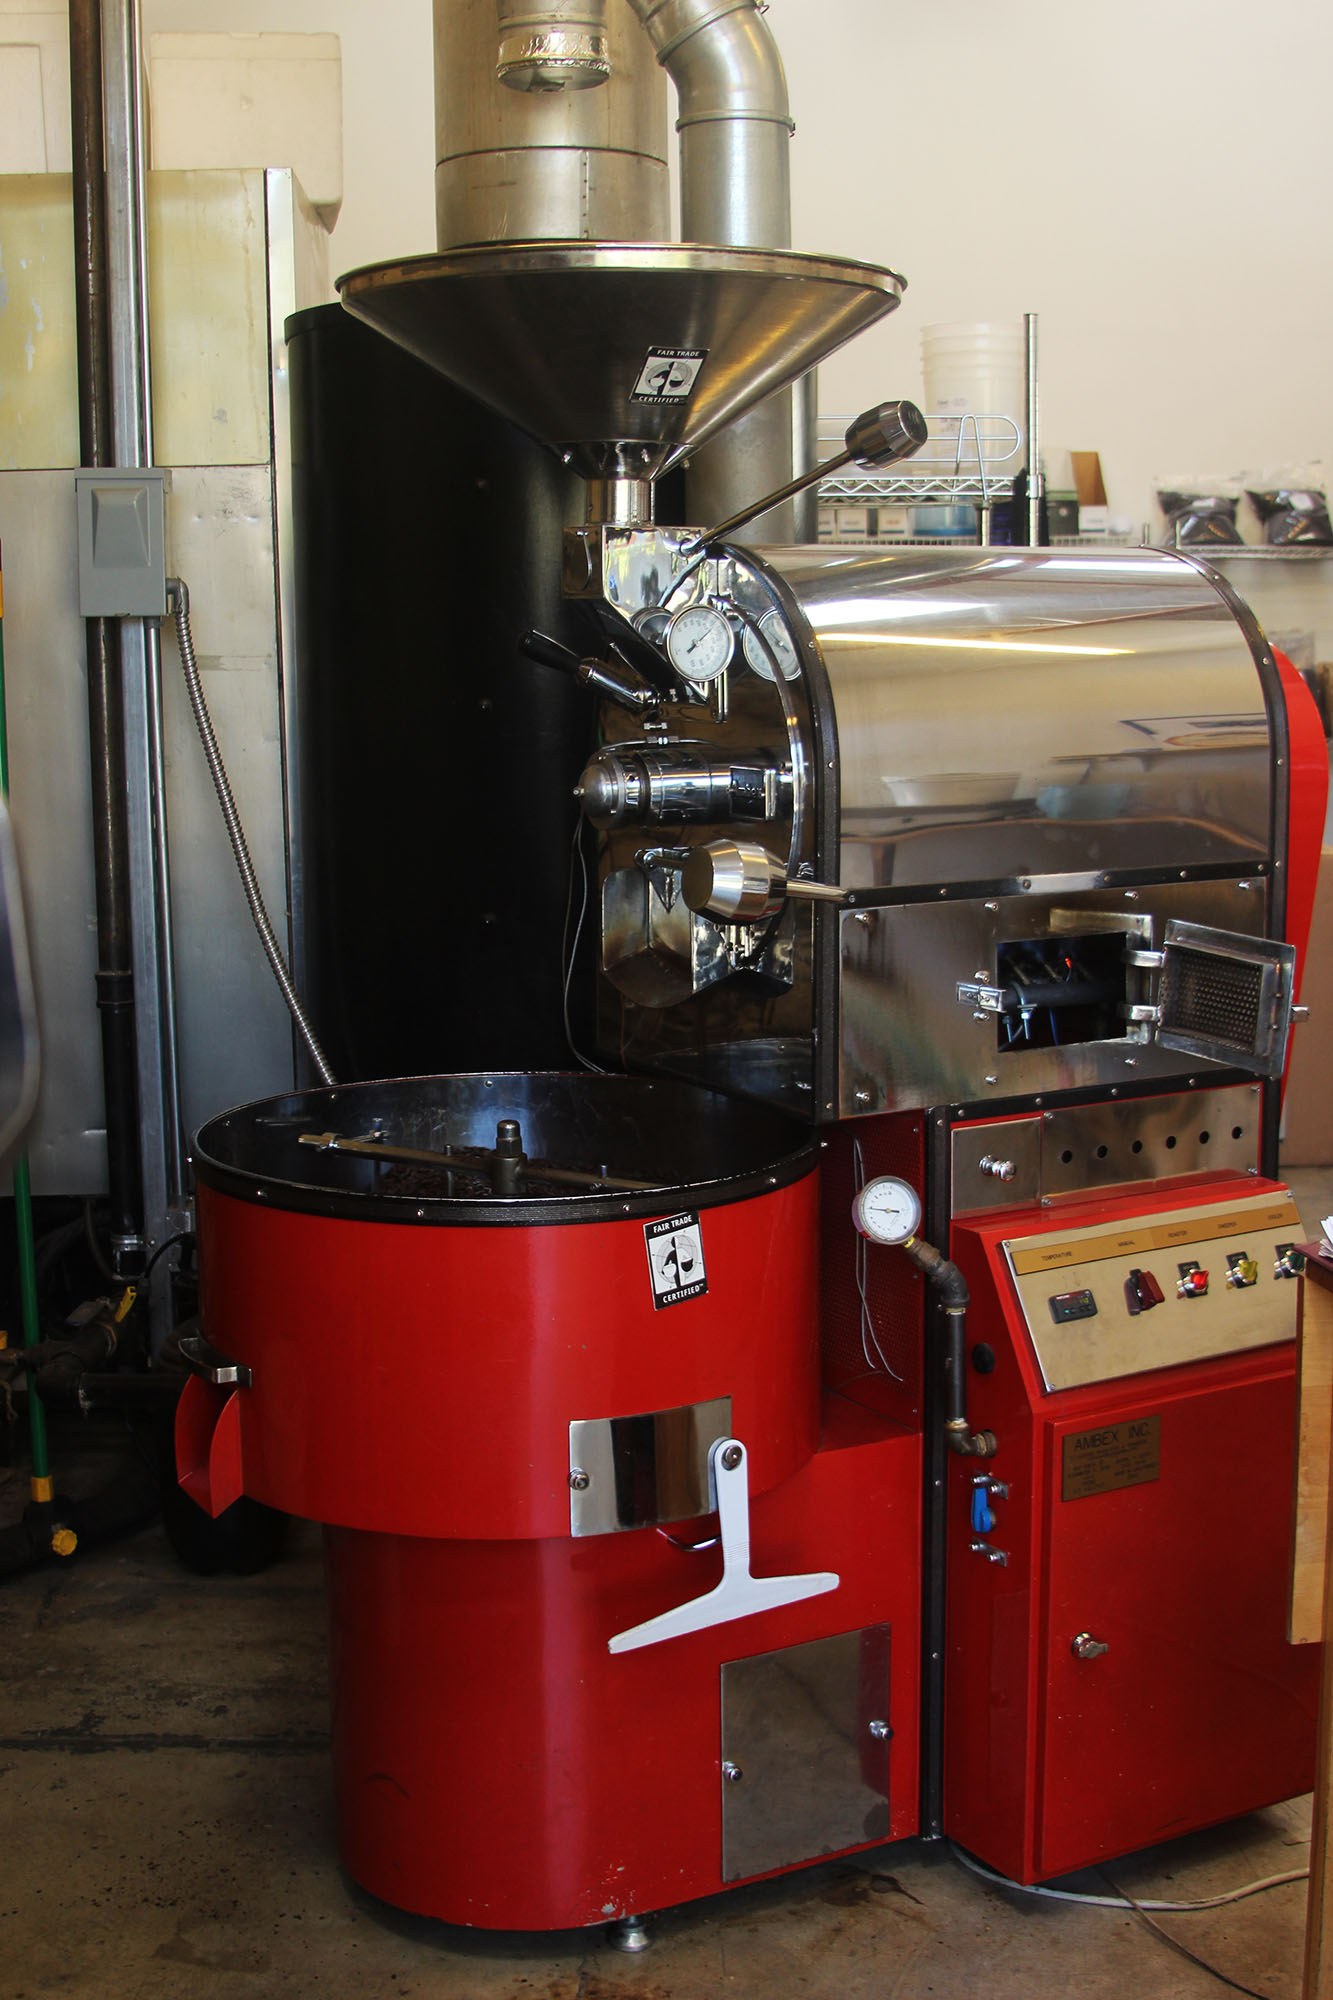 The red enamel roasting machine at Joebella coffee.